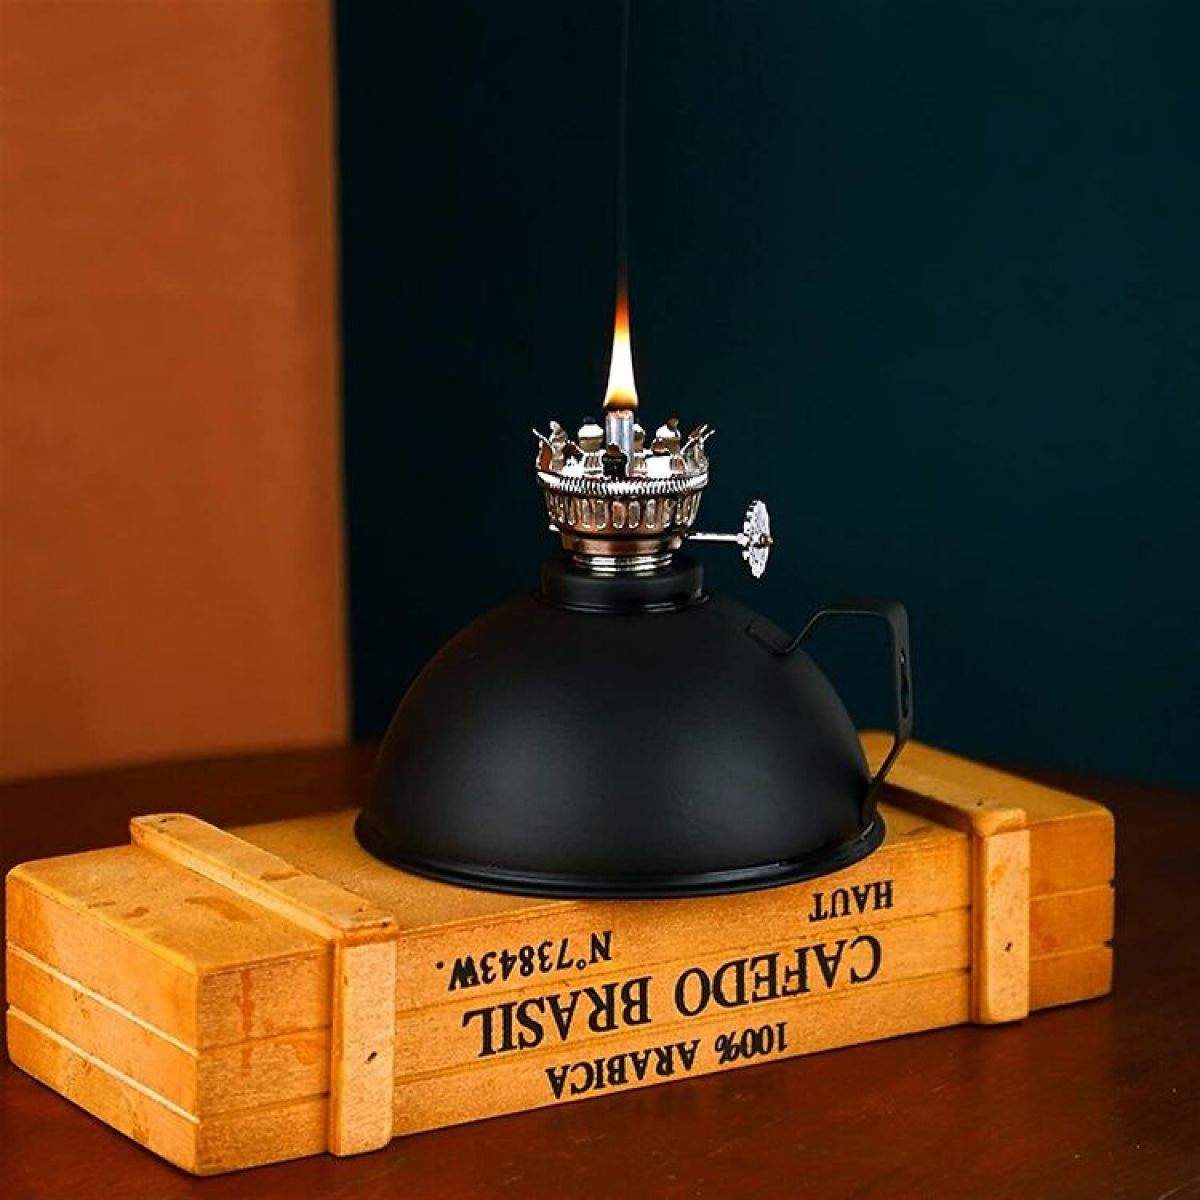 Amanigo Matte õlitatud lamp retrolamp, antiikküünal, must